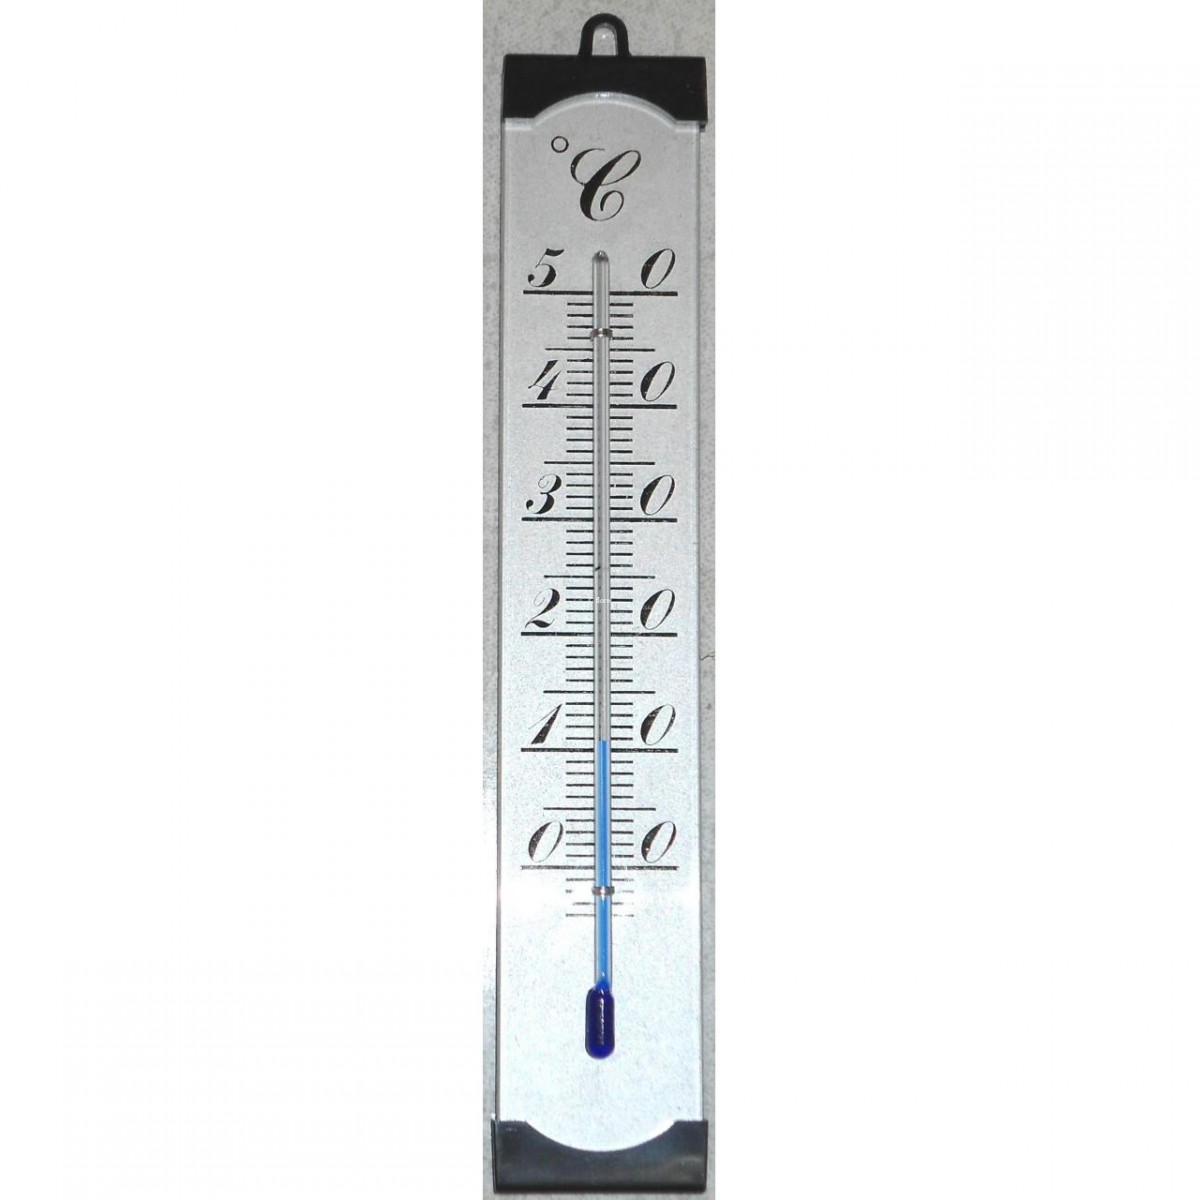 Thermomètre d'intérieur design alu. - Florol